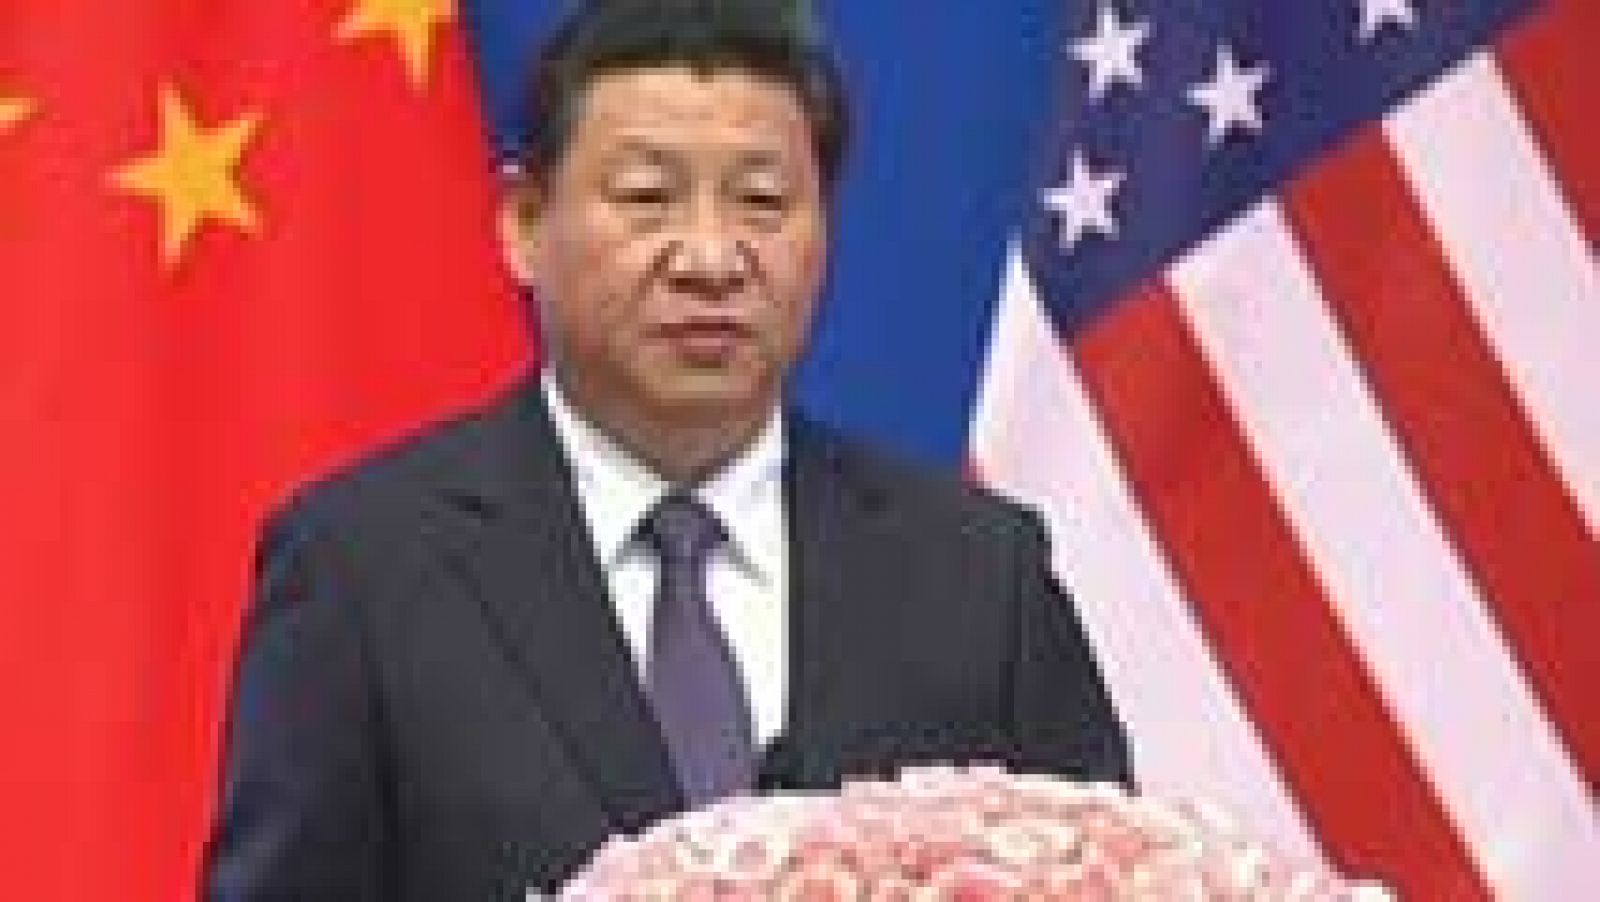 Telediario 1: El presidente de China viaja esta semana a Iberoamérica | RTVE Play